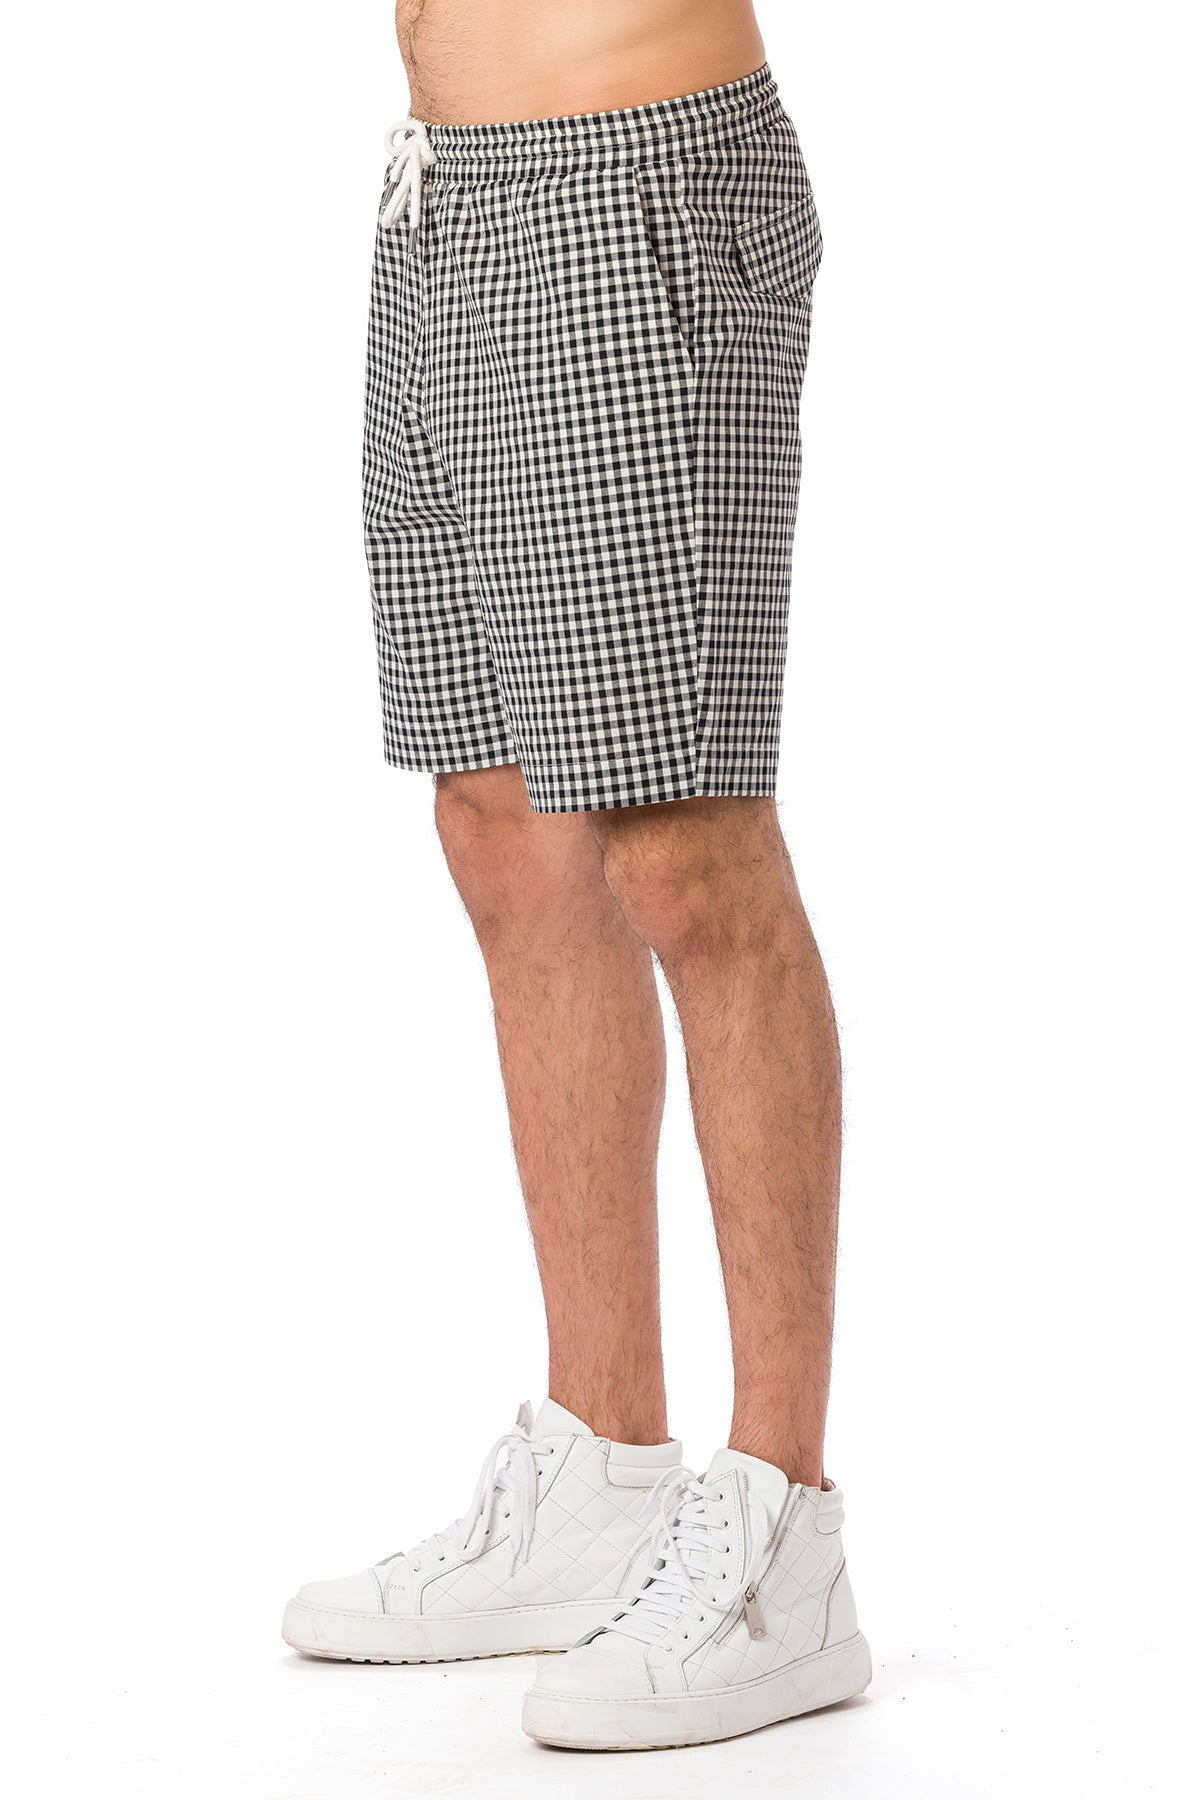 Suvi NYC Men's Checkered Pattern Shorts. Bermuda Casual Summer Cotton